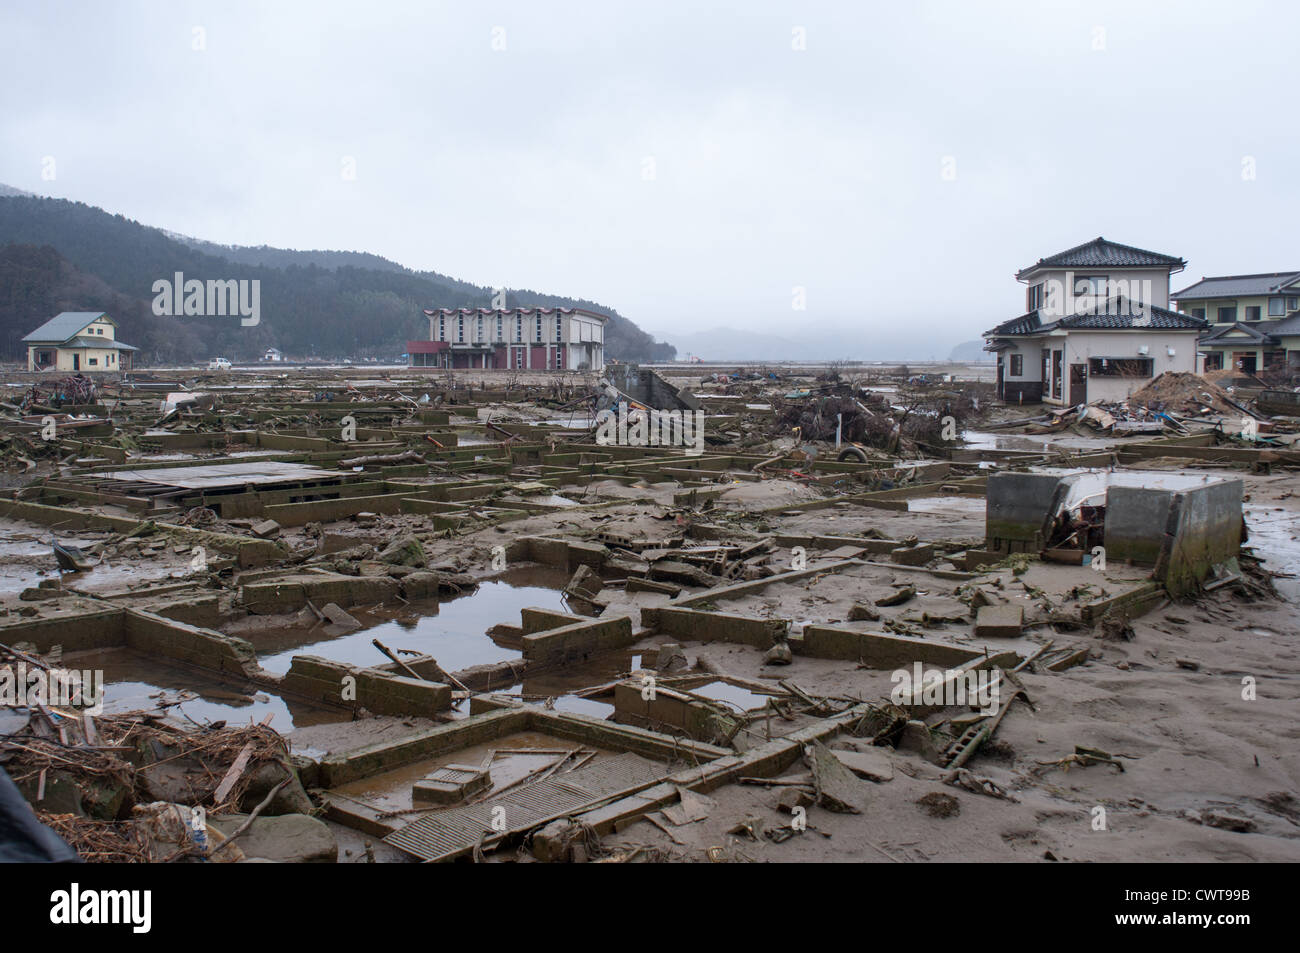 Ishinomaki, onosaki, one year after the devastating Tohoku earthquake and tsunamis wrecked large parts of Japan. Stock Photo